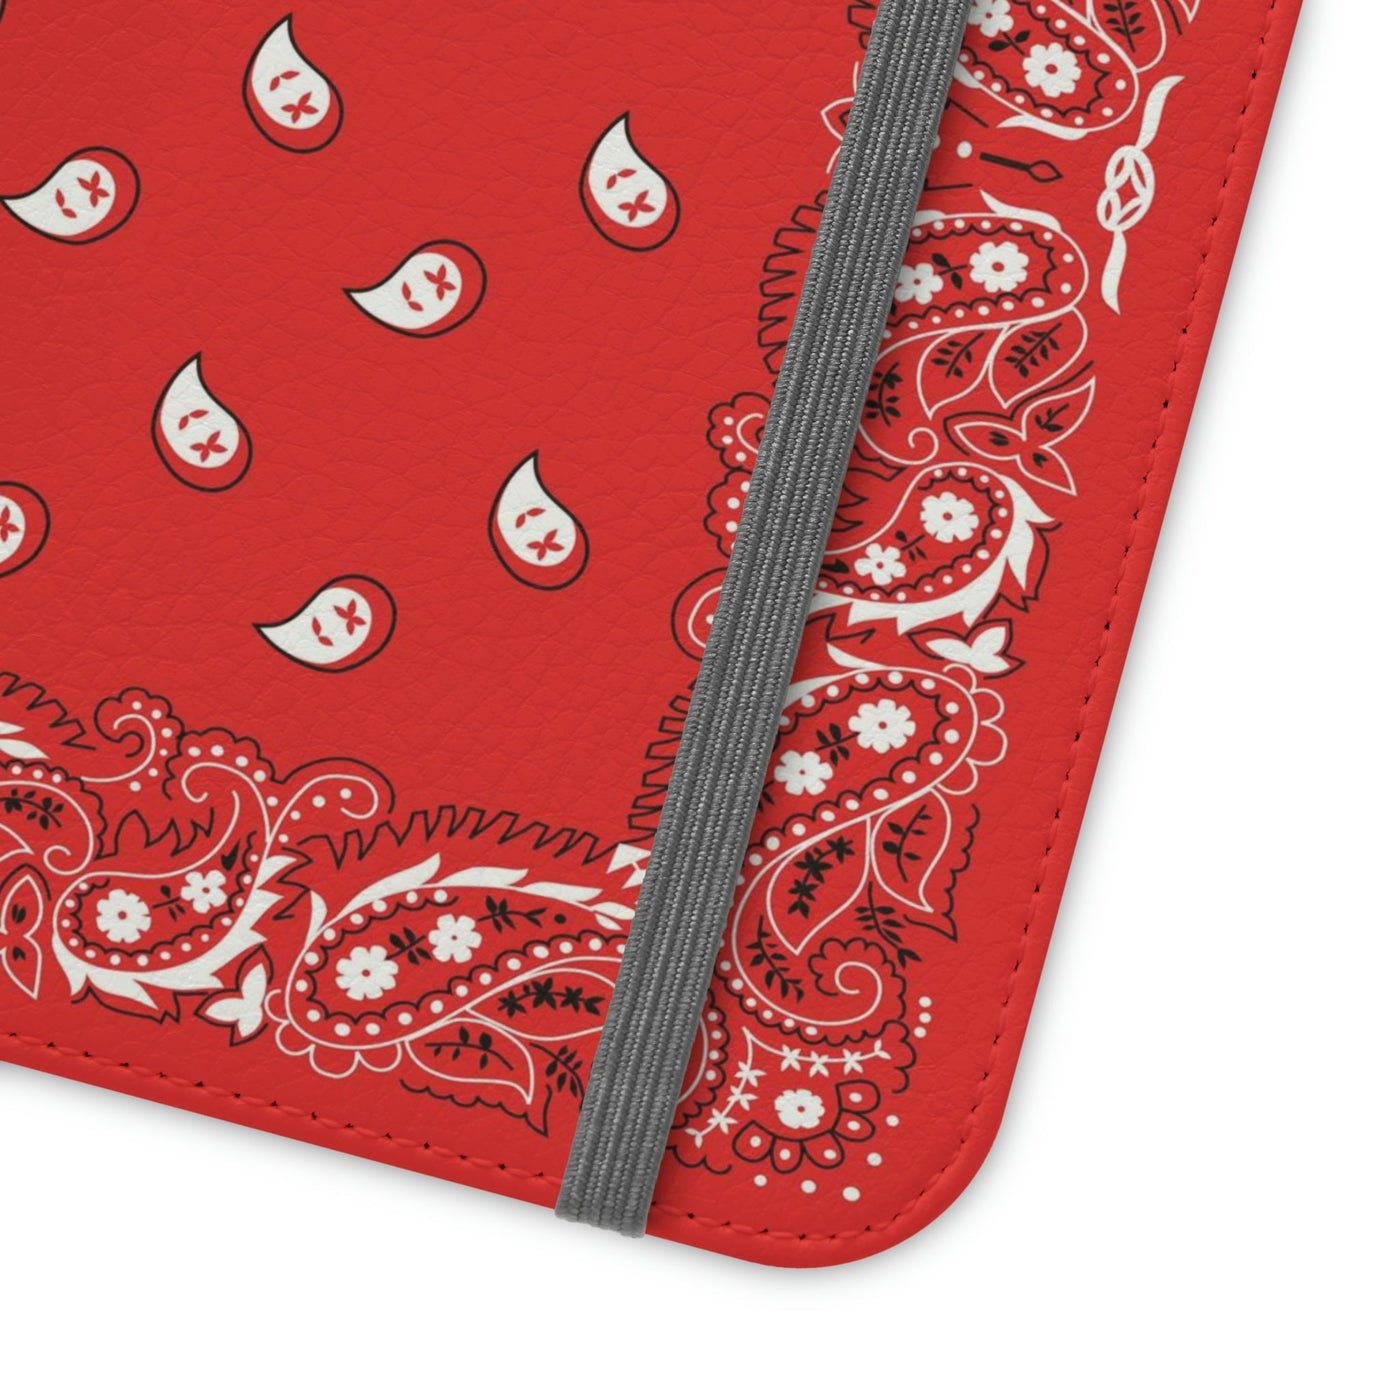 Red Bandana Pattern | Flip Wallet Phone Case